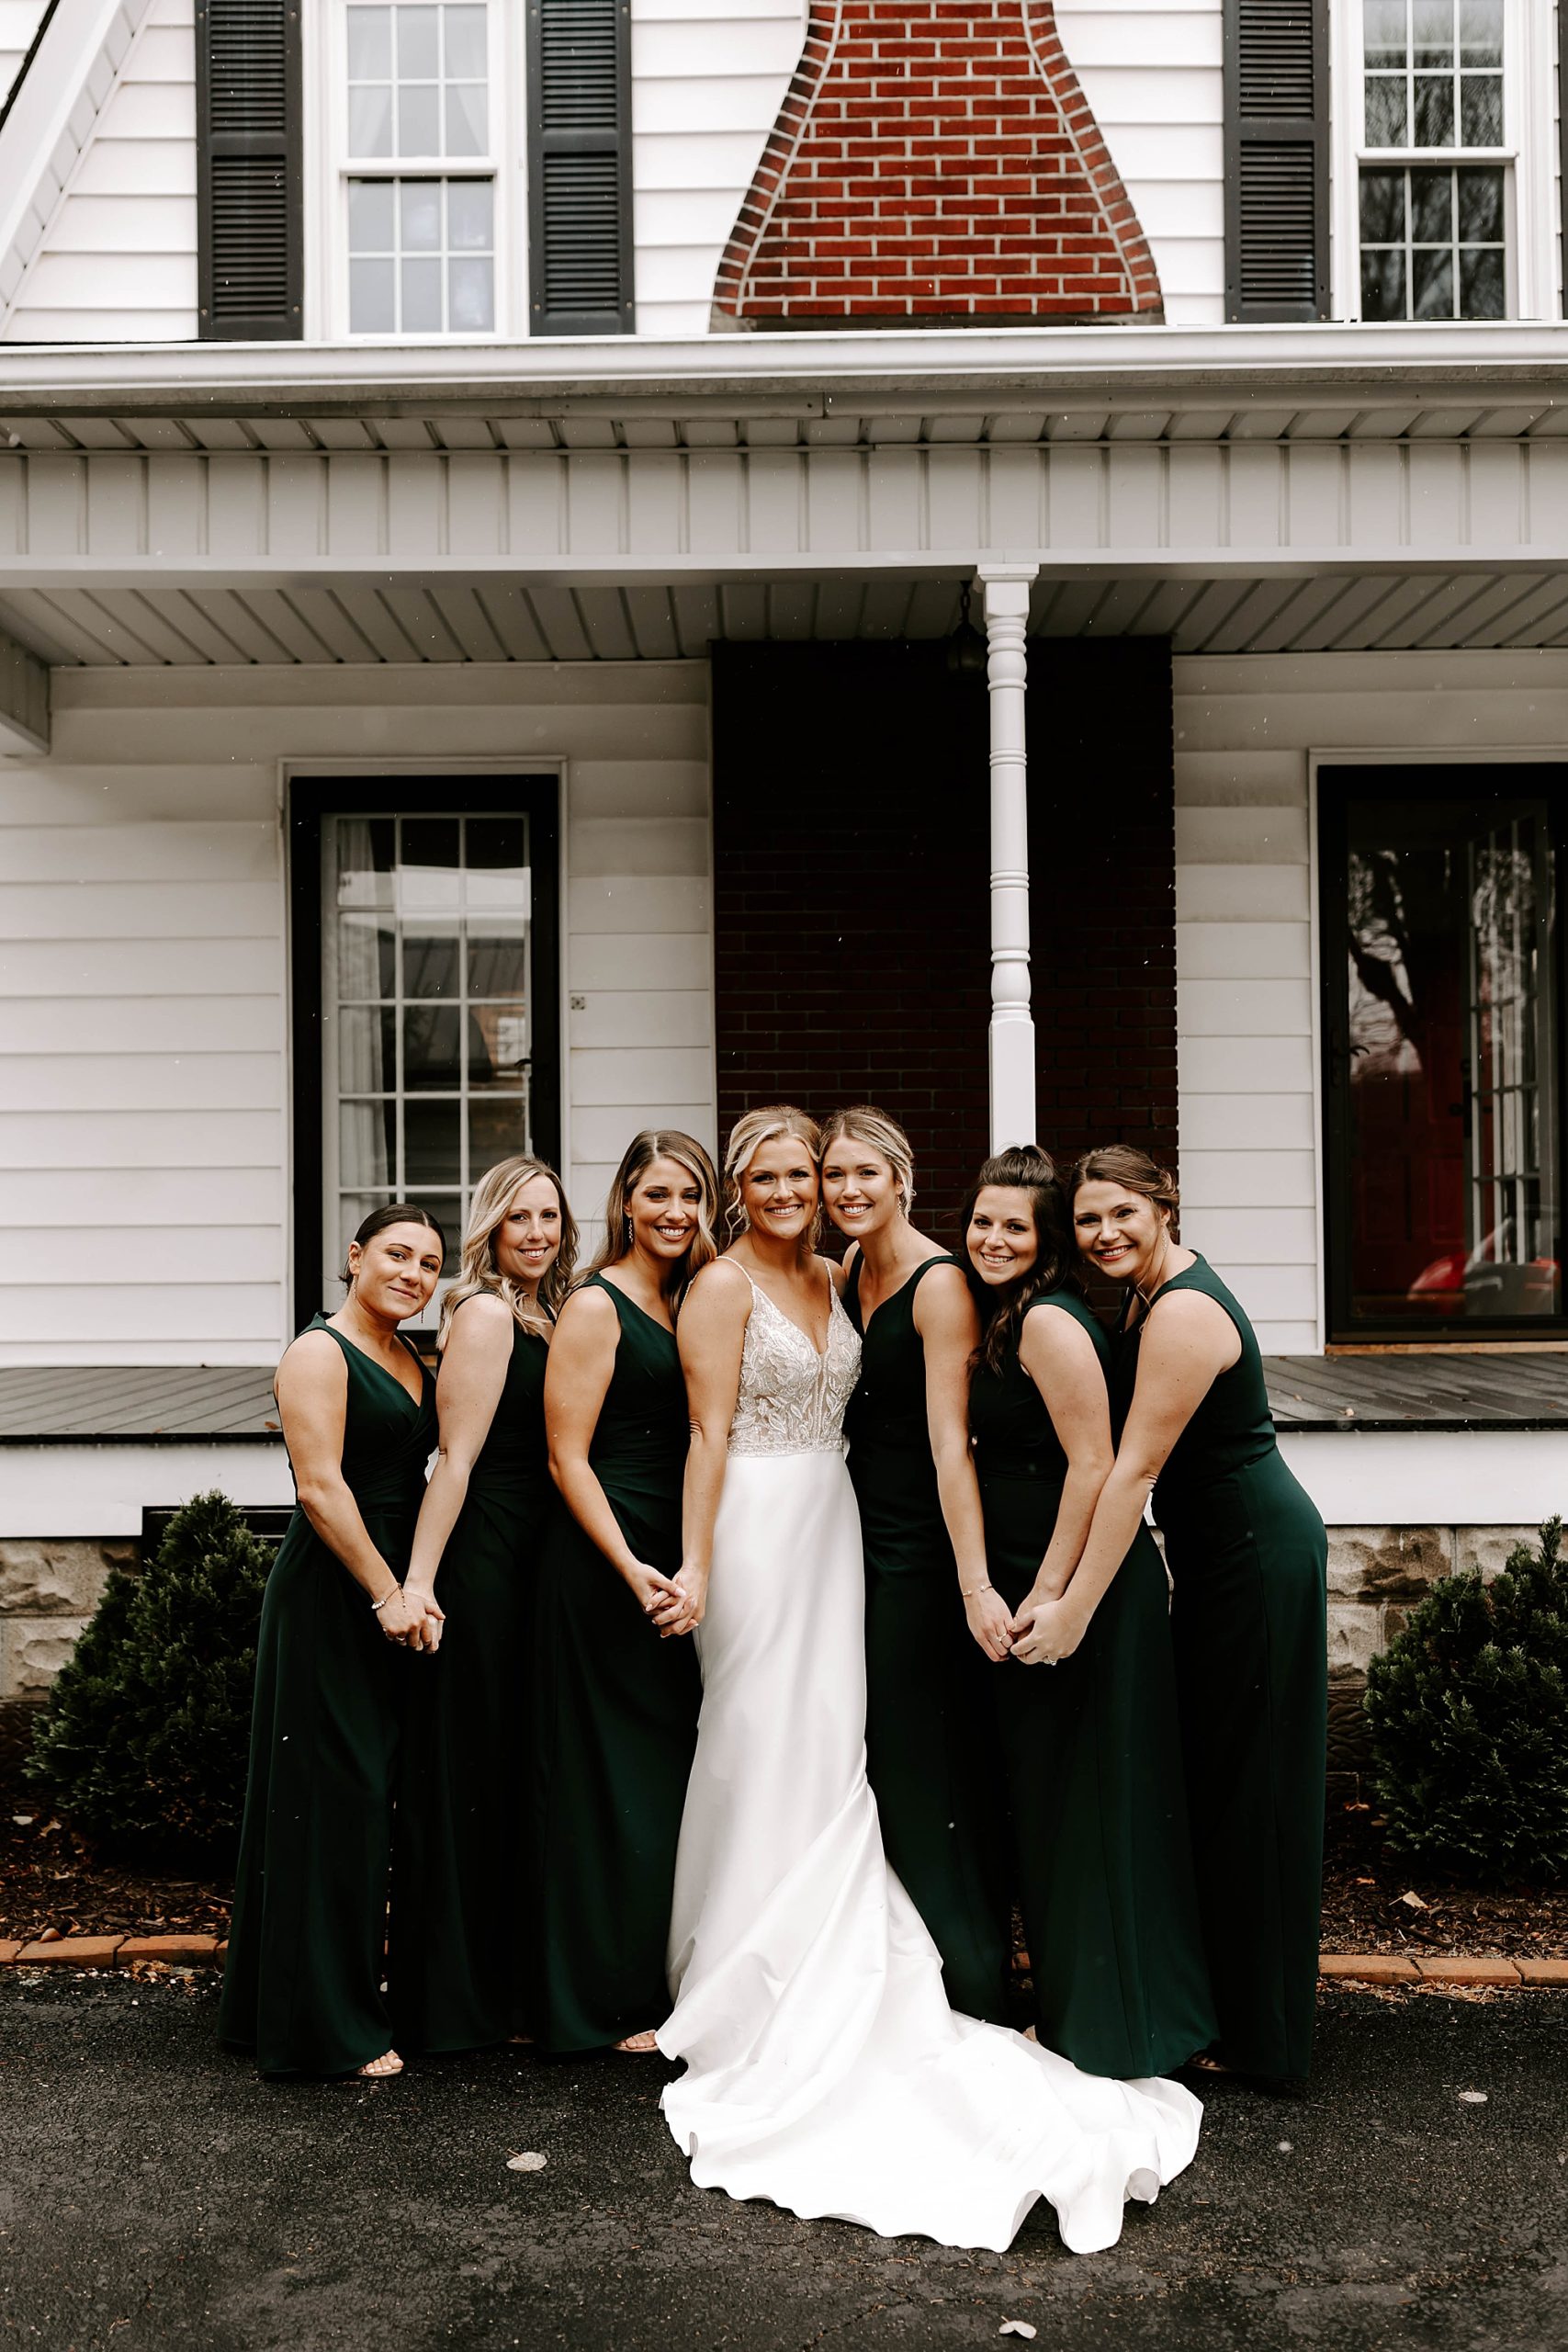 Indiana Country Club wedding, golf club wedding venues, pittsburgh weddings, Rachel Wehan Photography